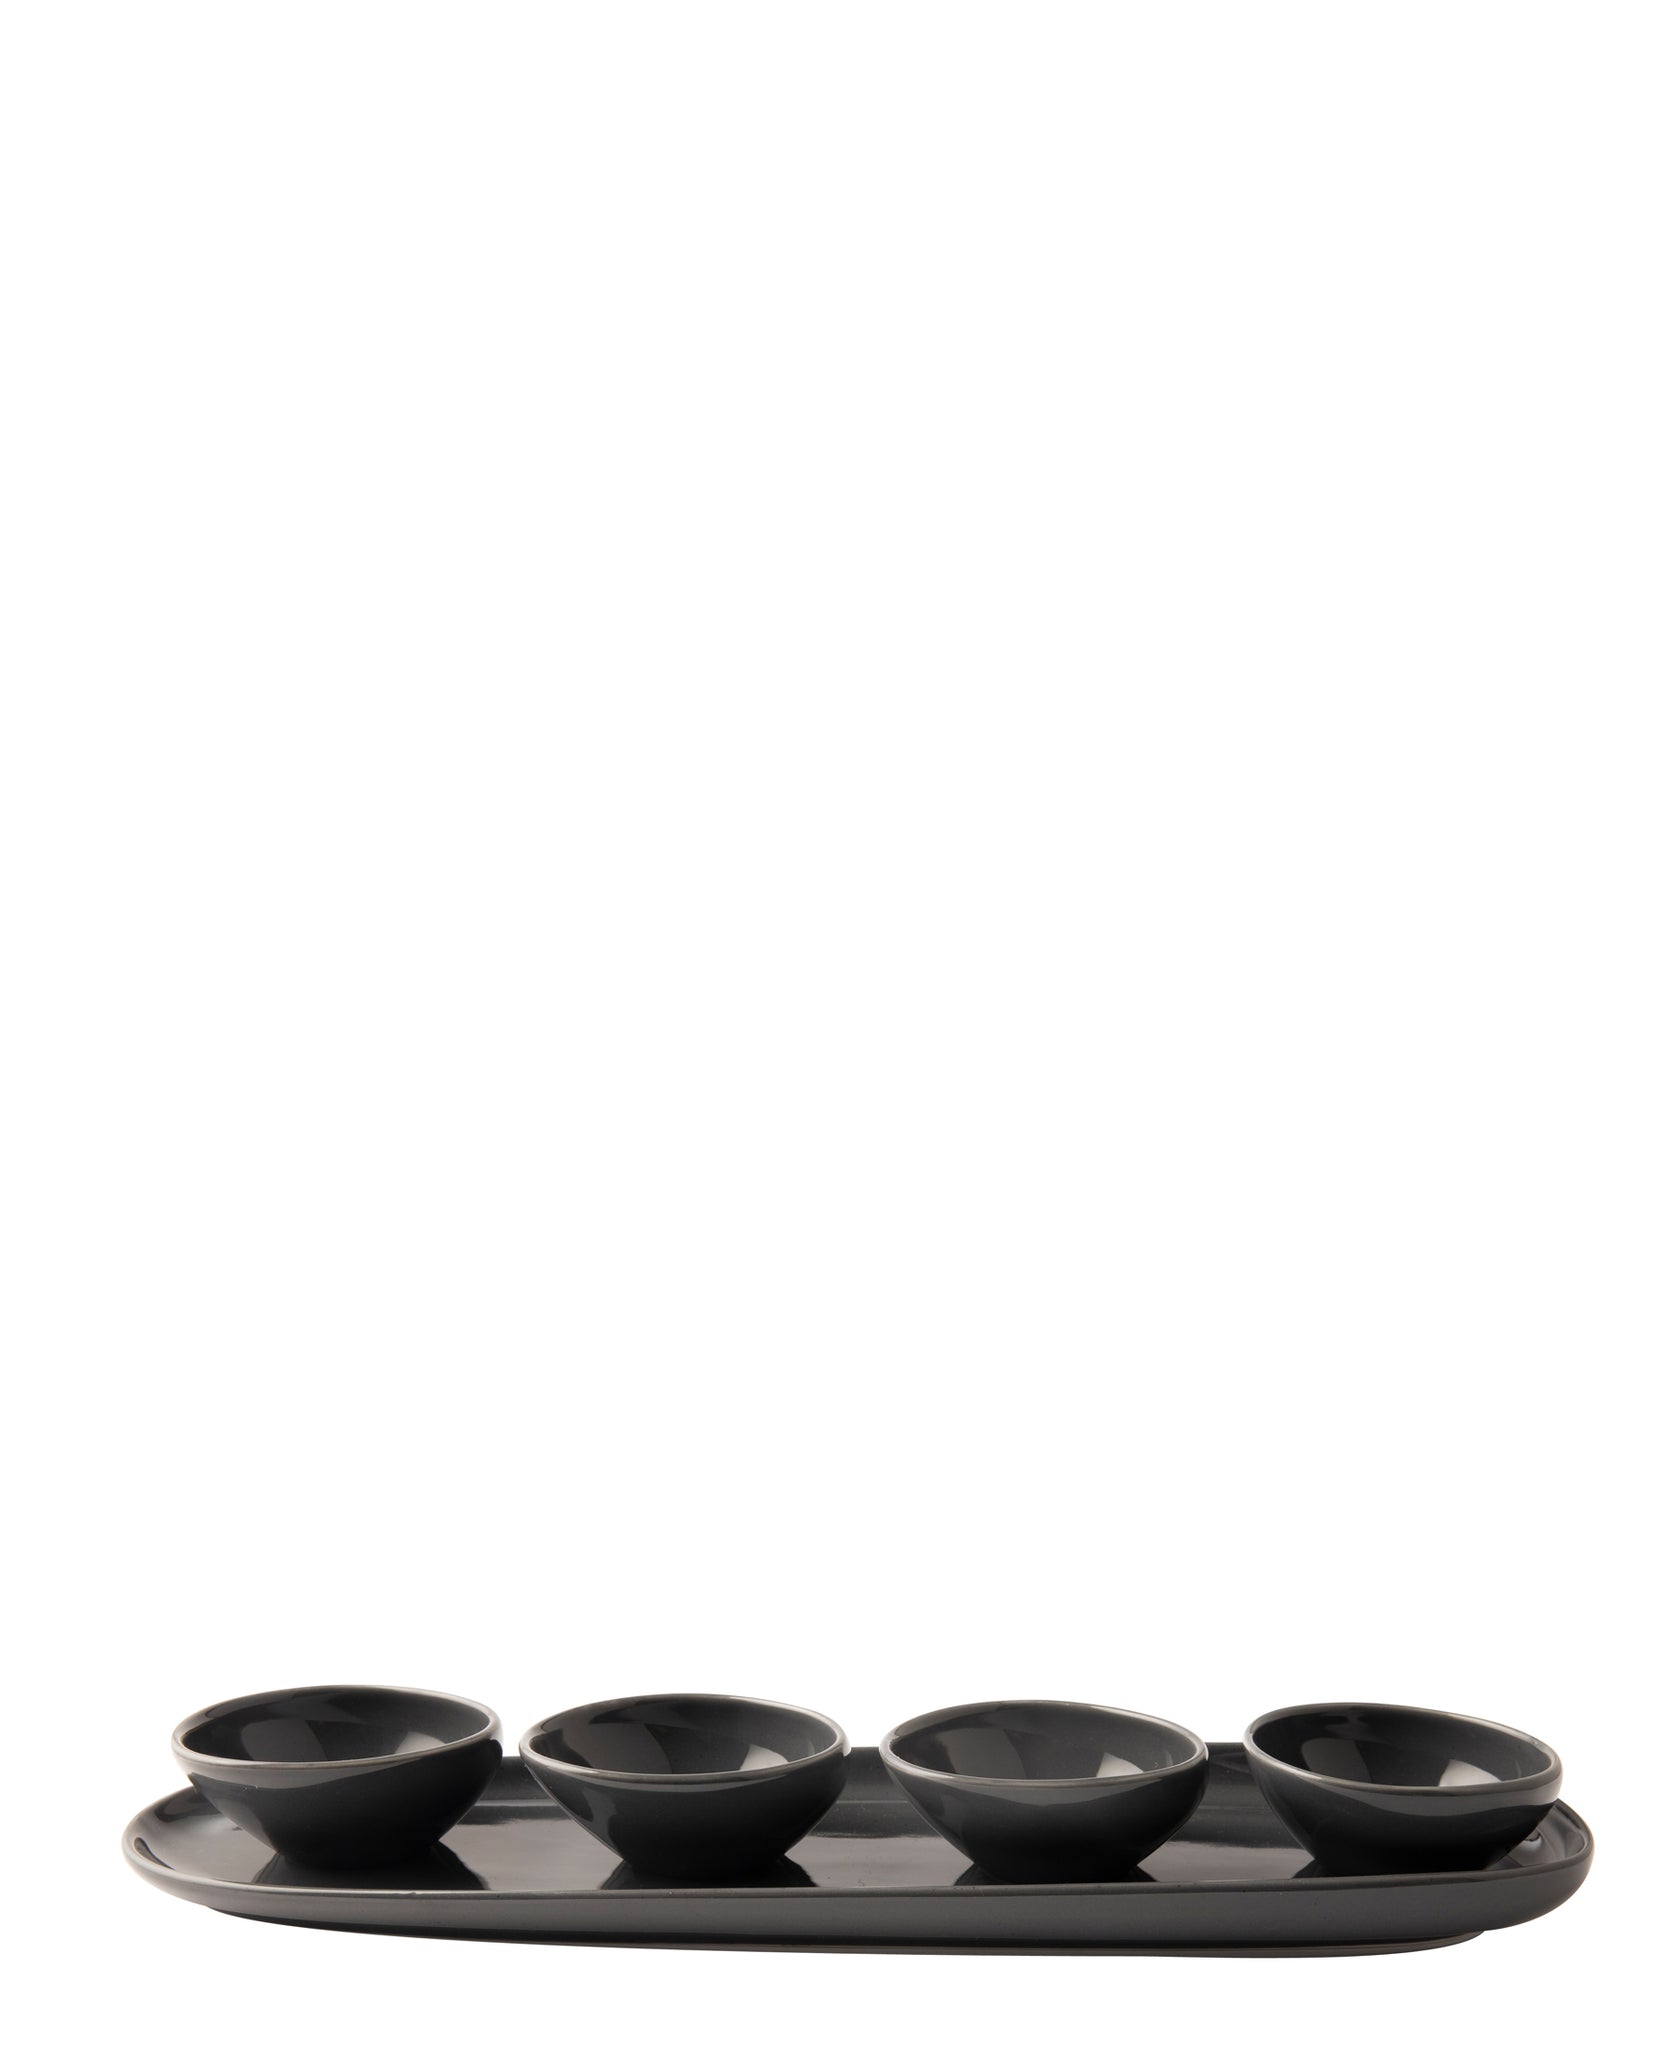 Omada Irregular Plate With 4 Bowls - Dark Grey